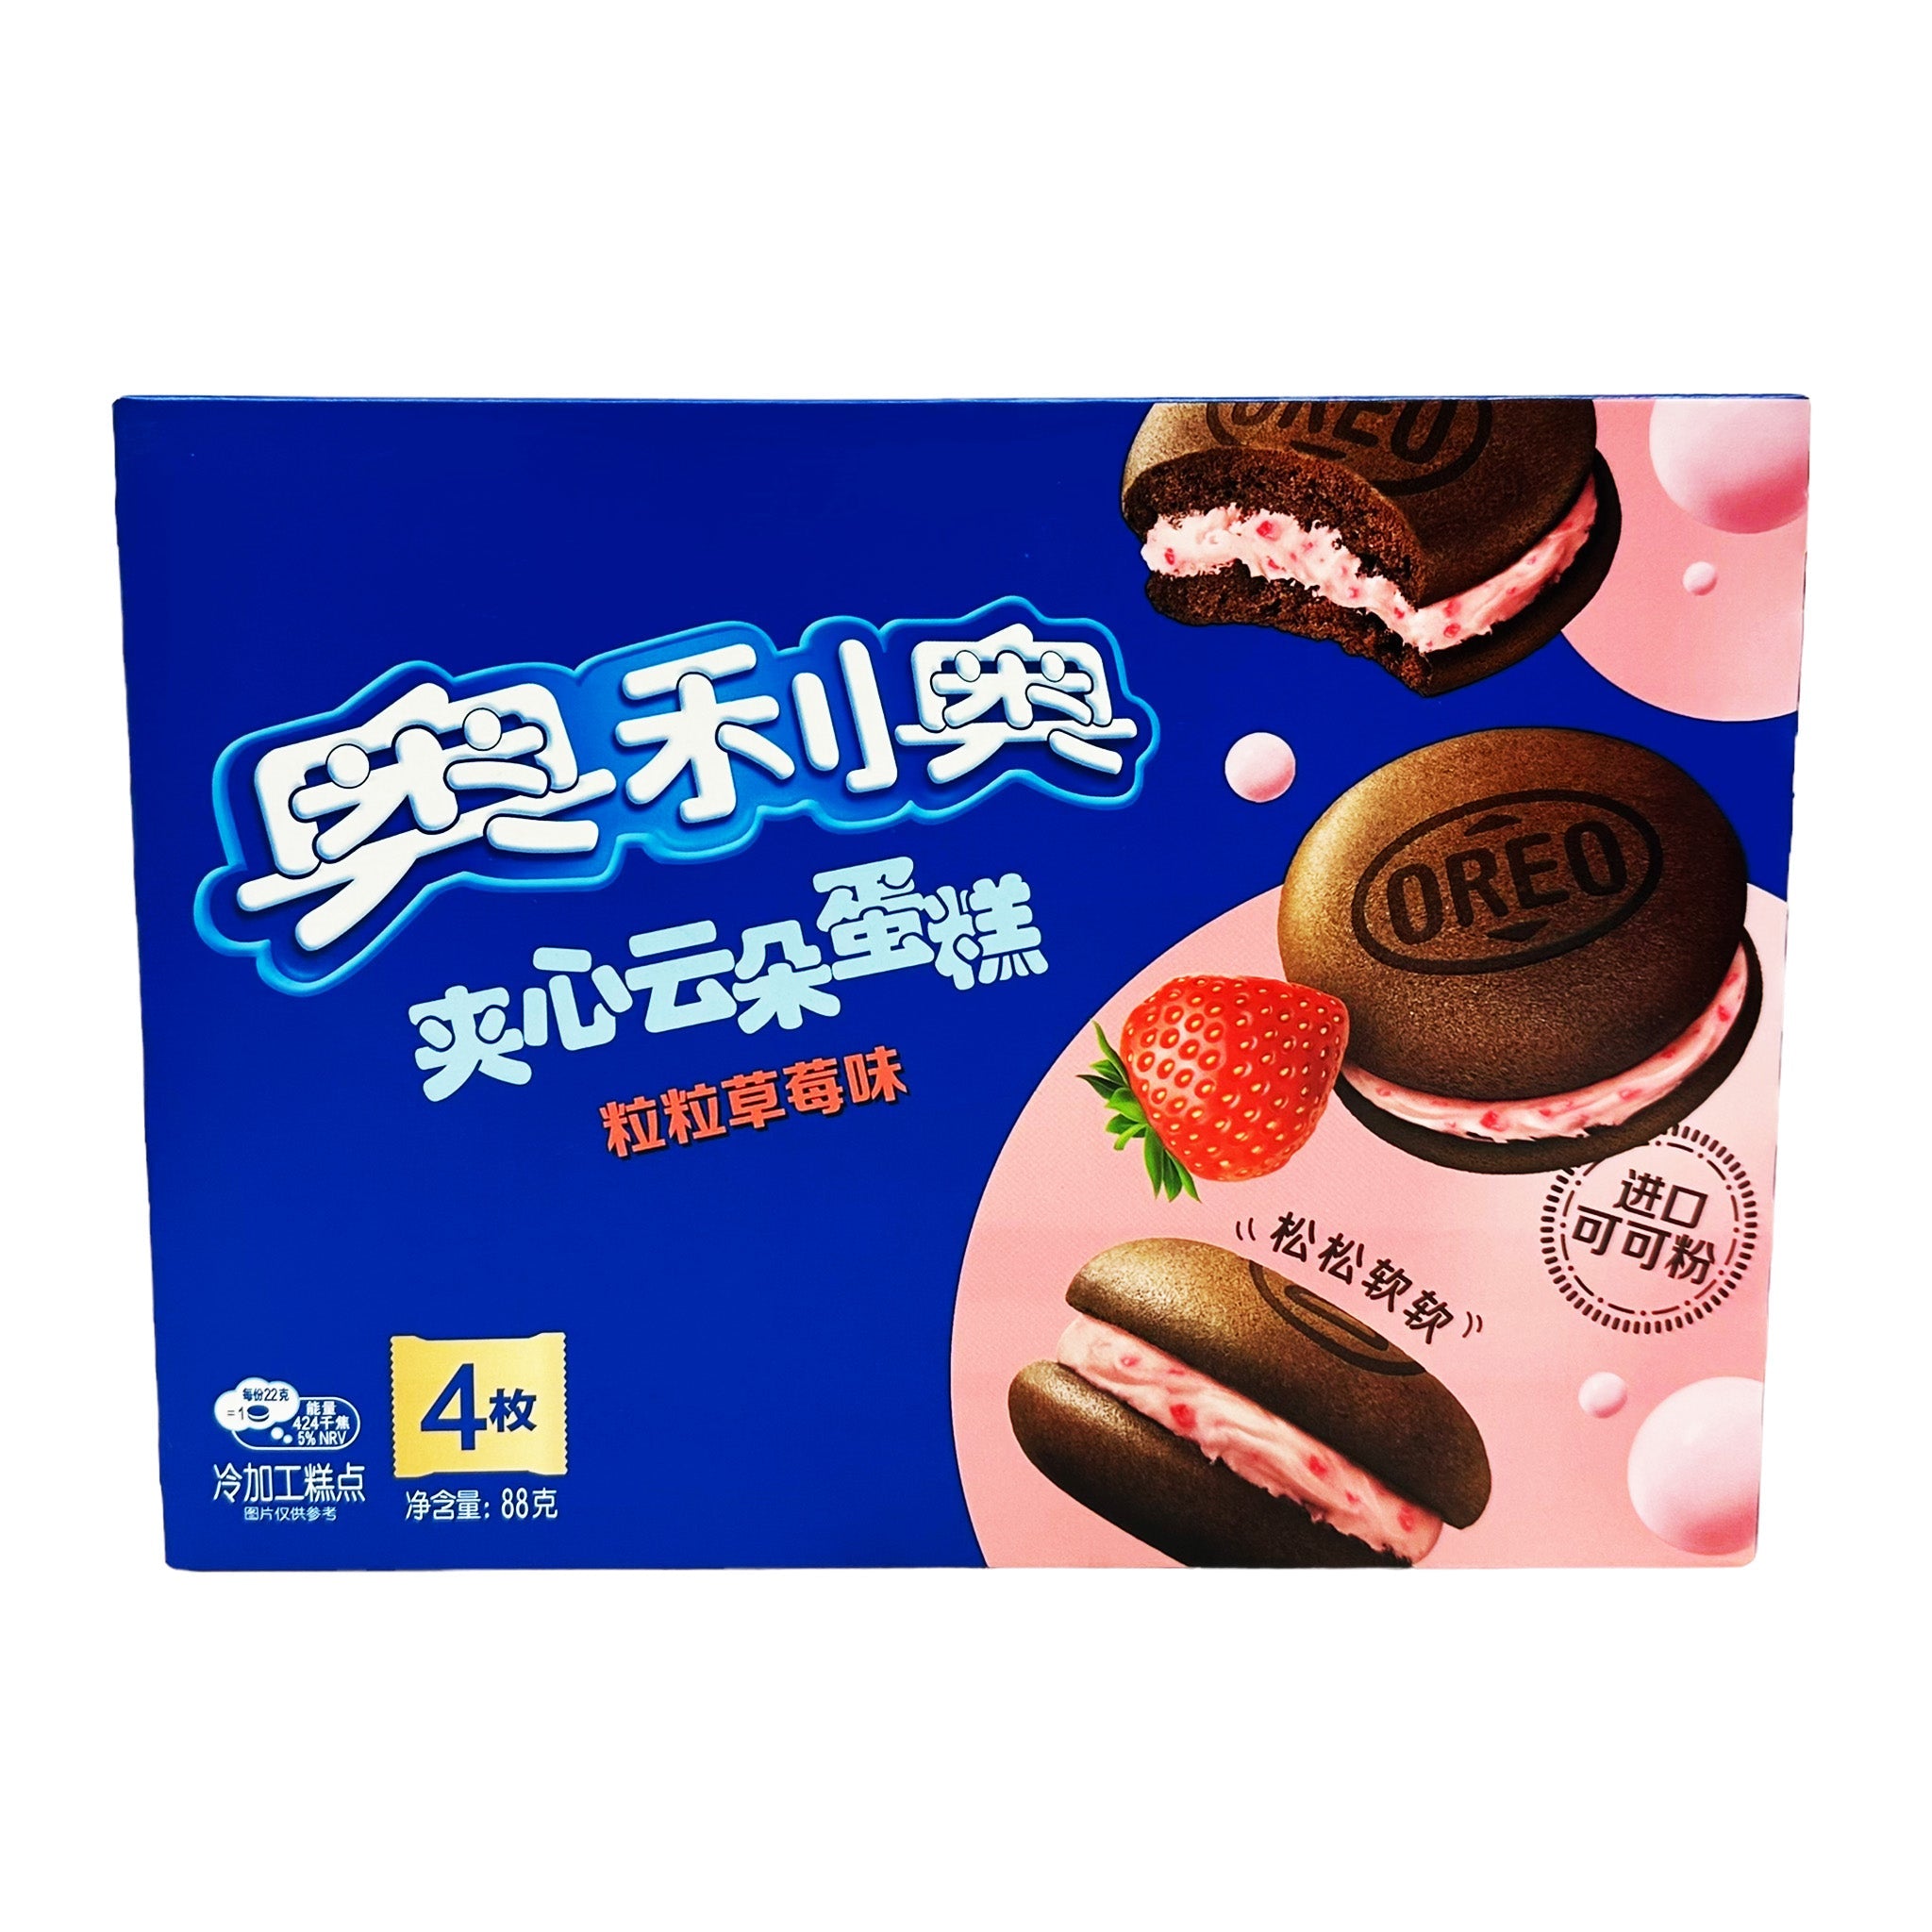 Oreo Strawberry Pudding Cakes - ASIA (16 Count)